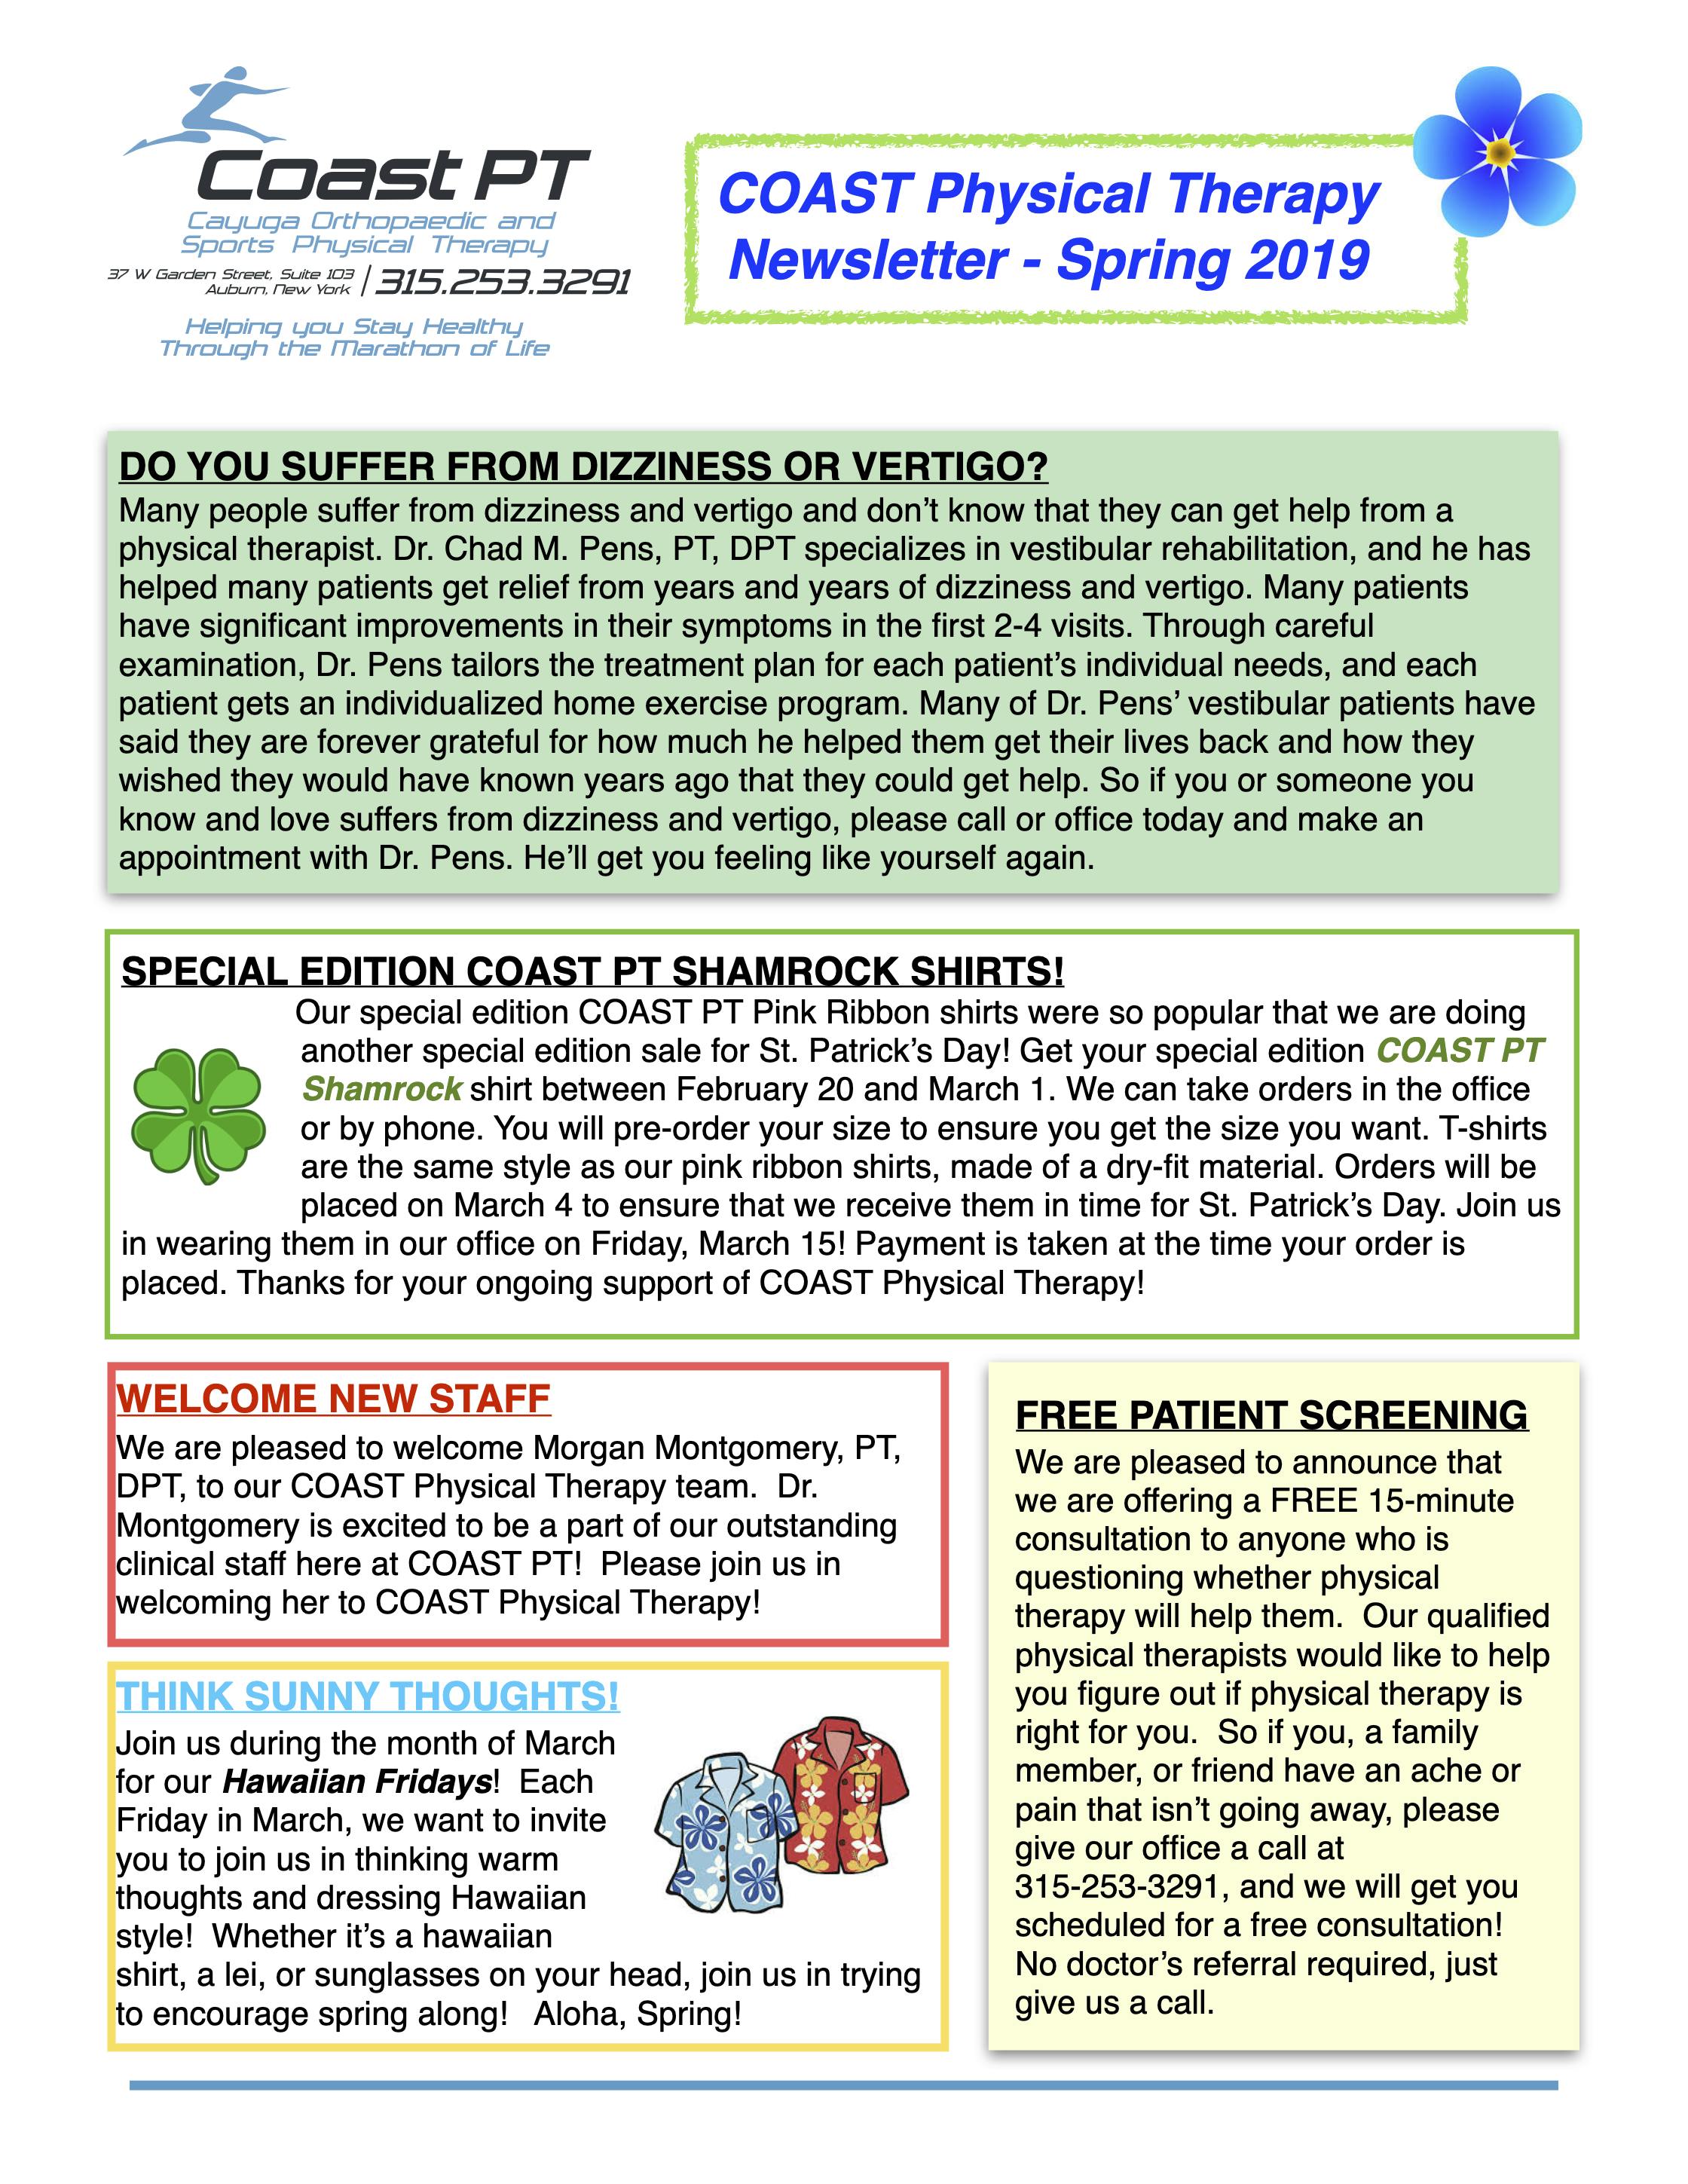 Coast PT Spring Newsletter 2019 p. 2